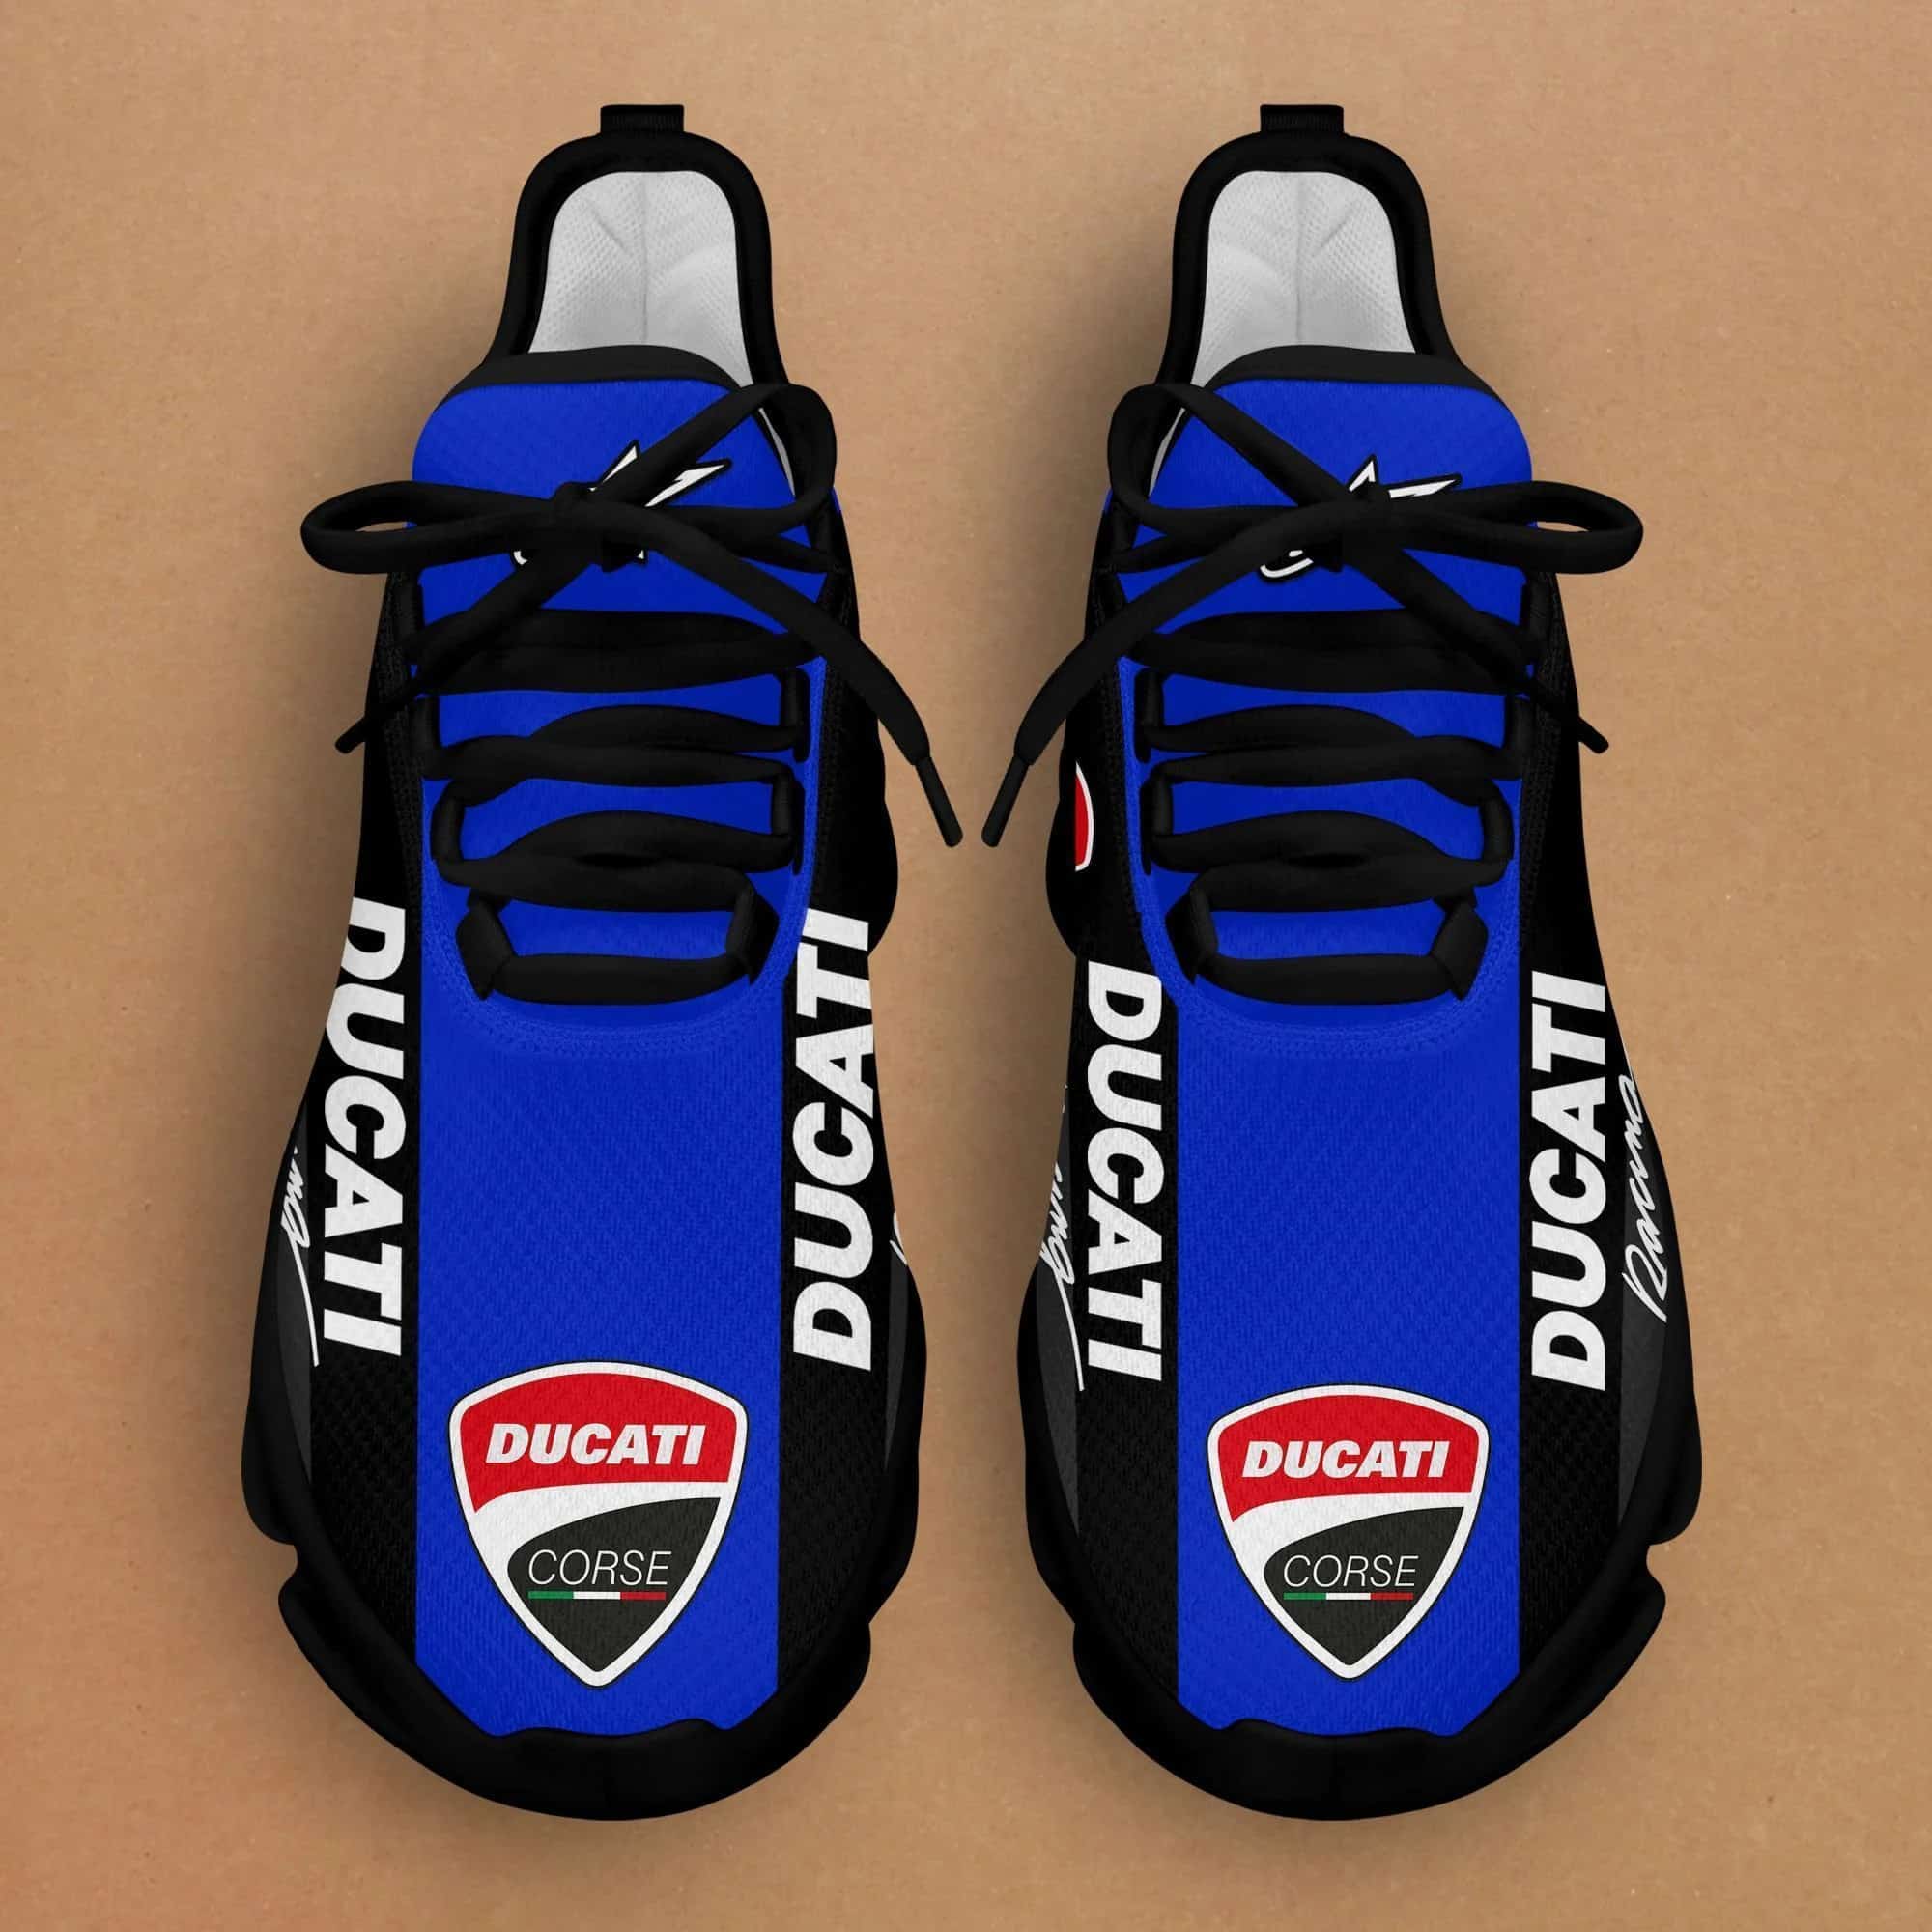 Ducati Racing Running Shoes Max Soul Shoes Sneakers Ver 4 3